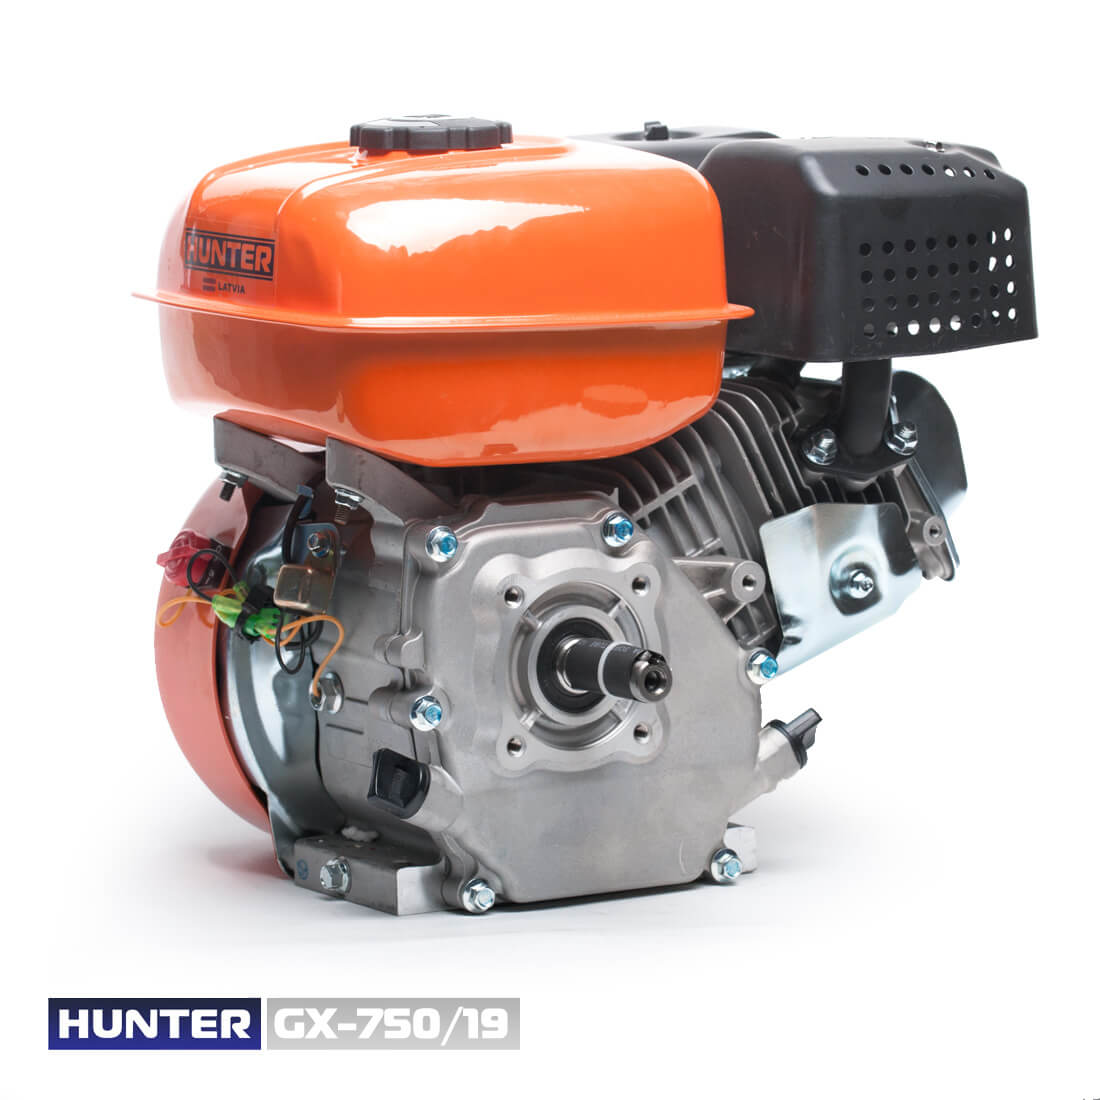 Фото Двигатель бензиновый HUNTER GX-750/19 (шпонка) цена 5900грн №4 — Hunter